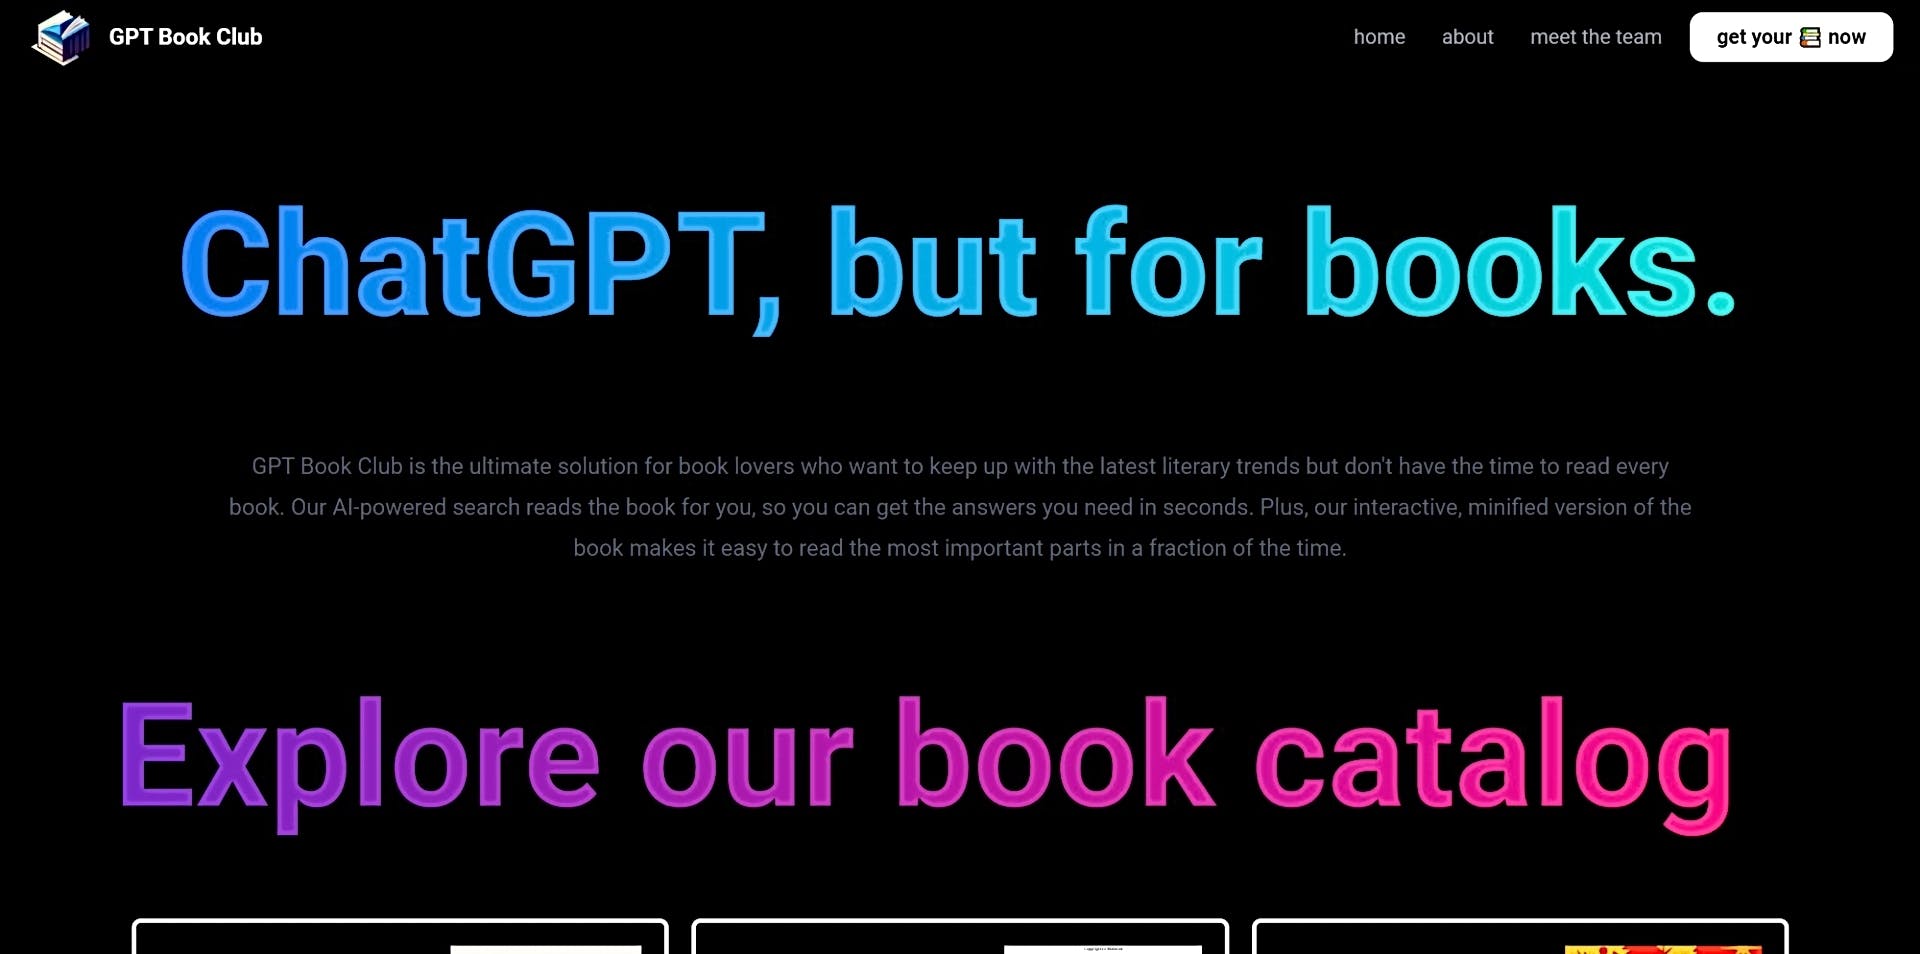 GPT Book Club featured